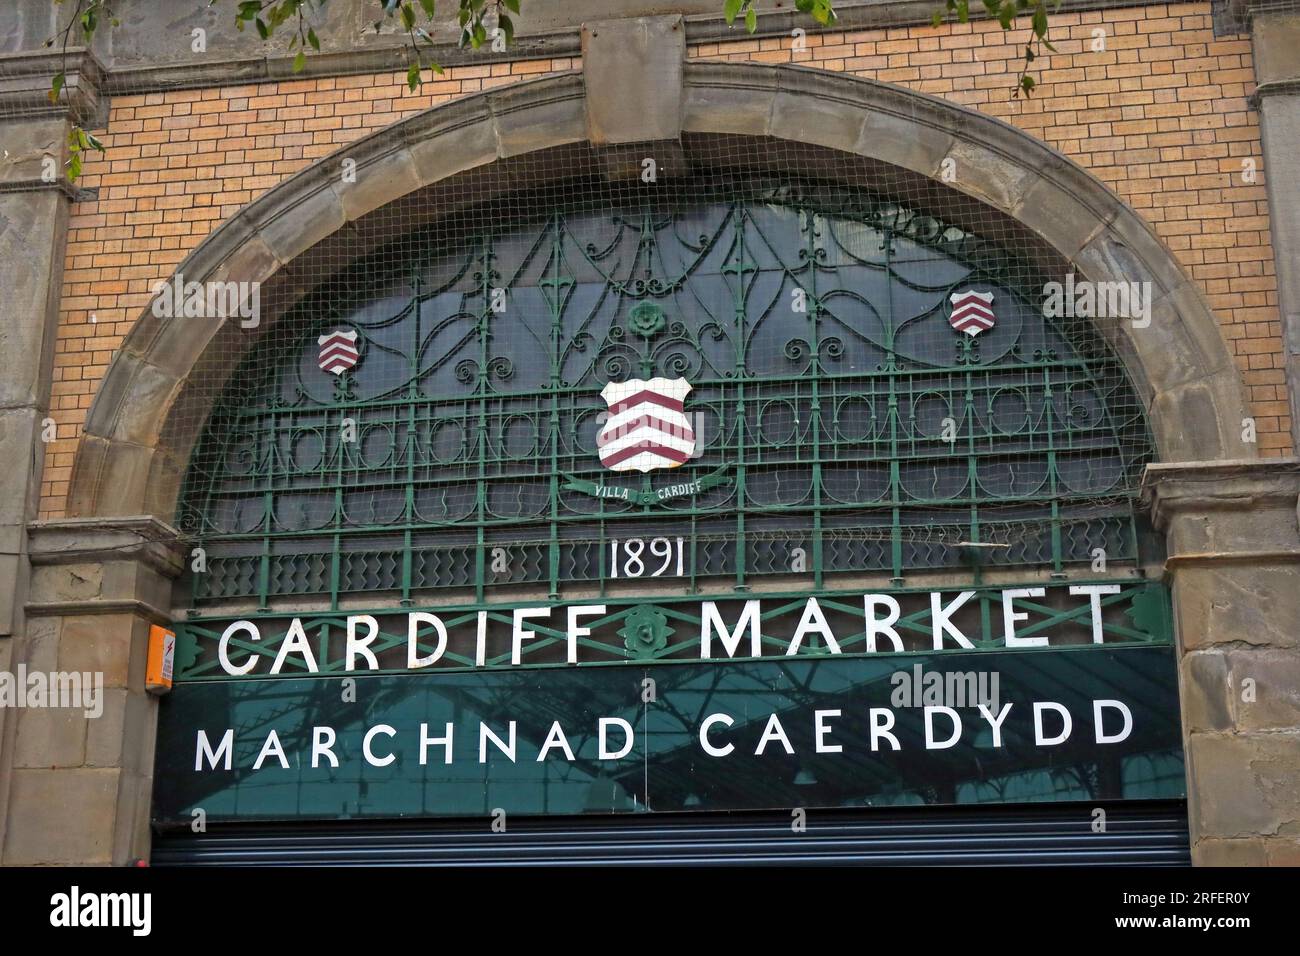 Trinity Street entrance to Cardiff Market, Marchnad Caaerdydd, Castle Quarter, 49 St. Mary Street, Cardiff, Wales, UK, CF10 1AU Stock Photo